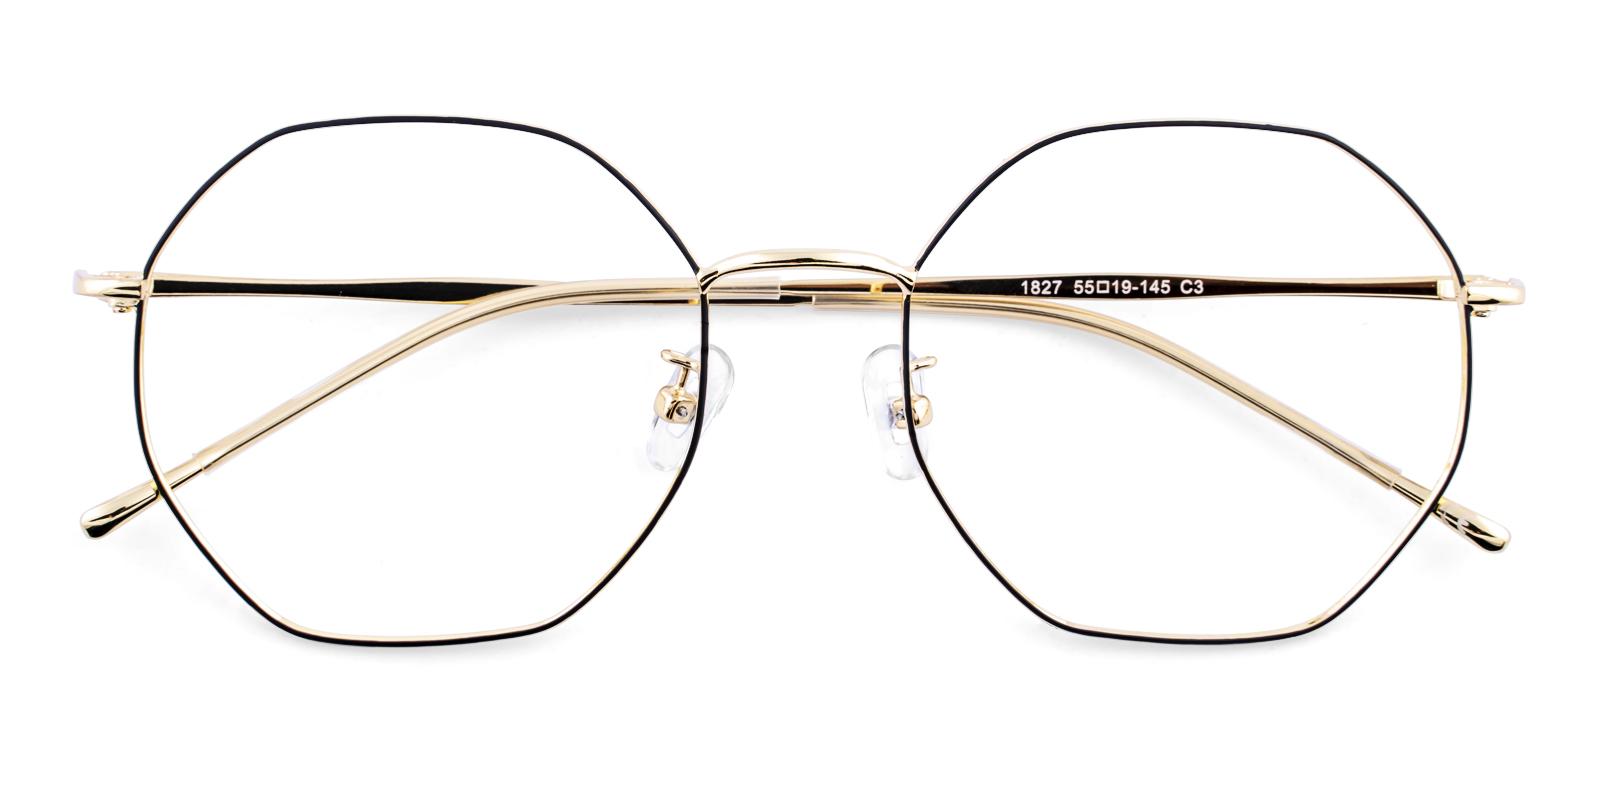 Salieur Gold Metal Eyeglasses , NosePads Frames from ABBE Glasses